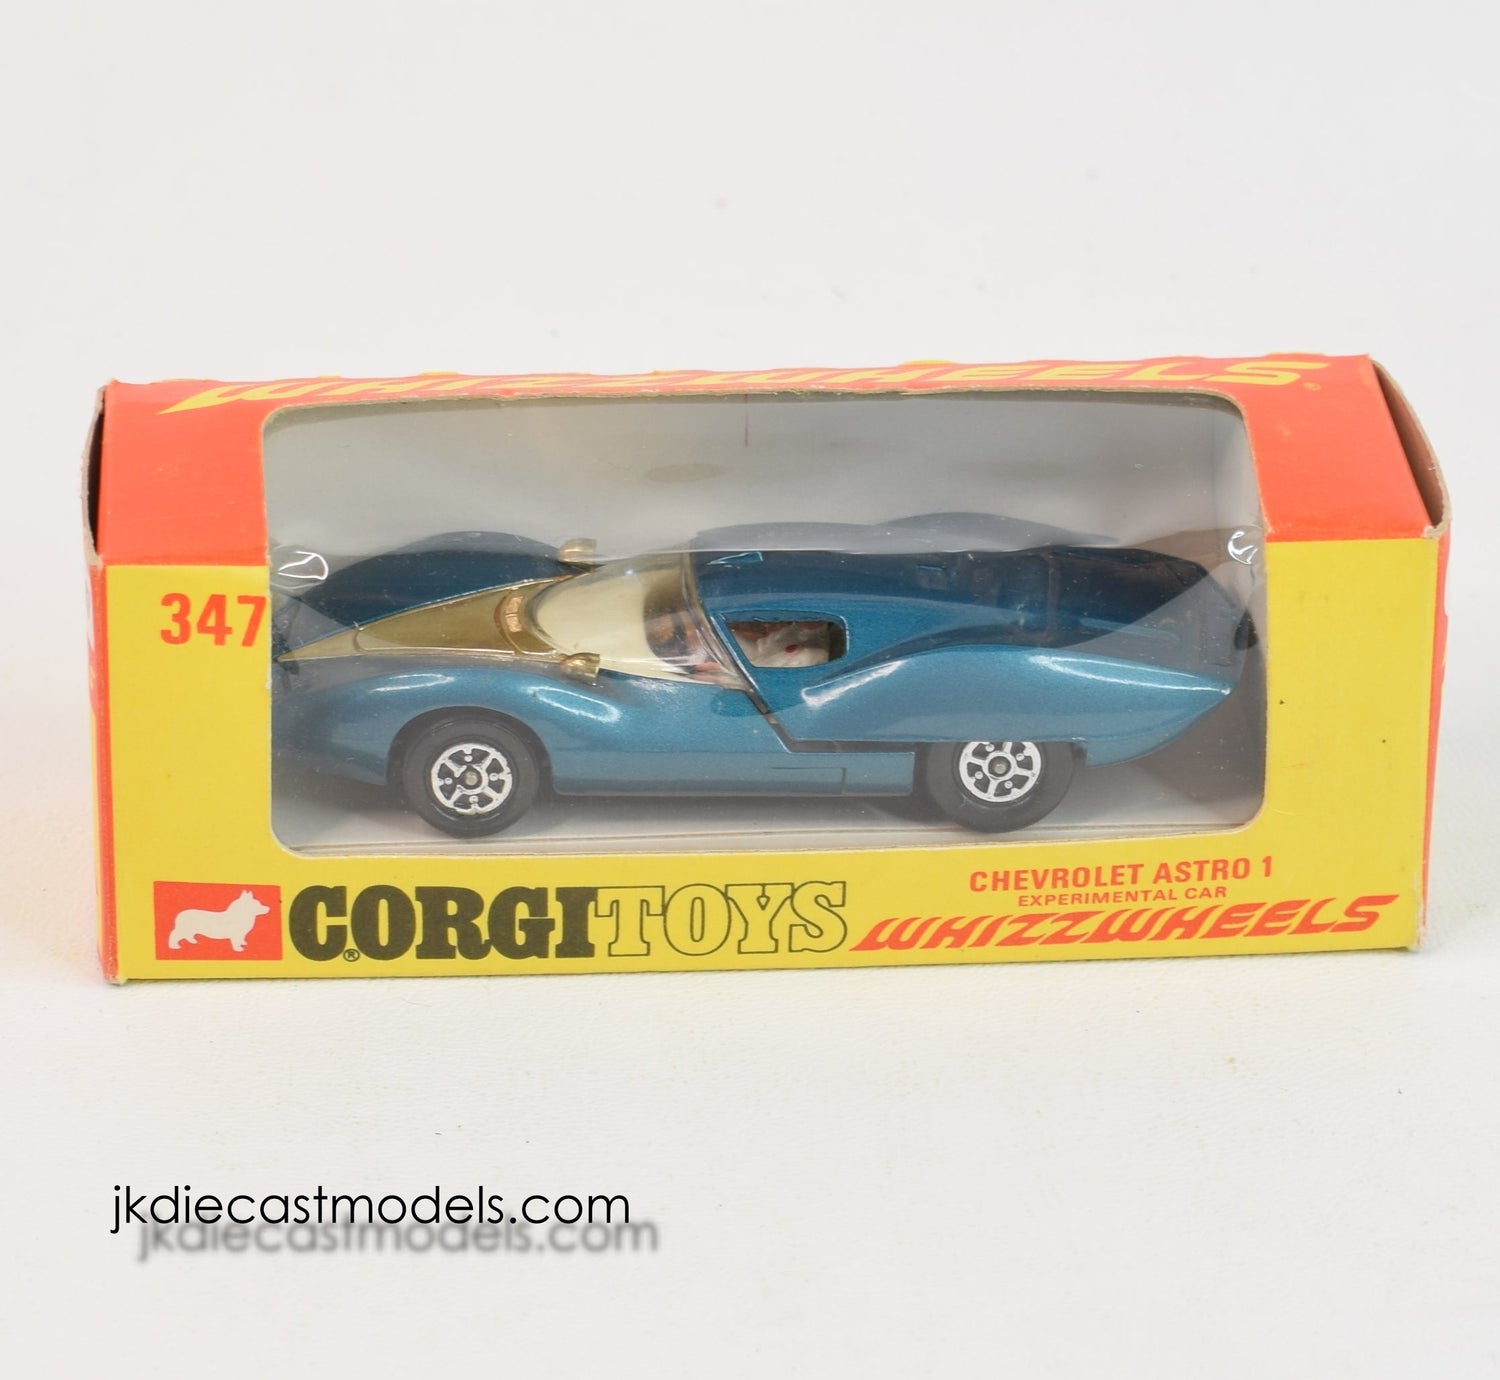 Corgi toys 347 Chevrolet Astro 1 Experimental car Virtually Mint/Boxed